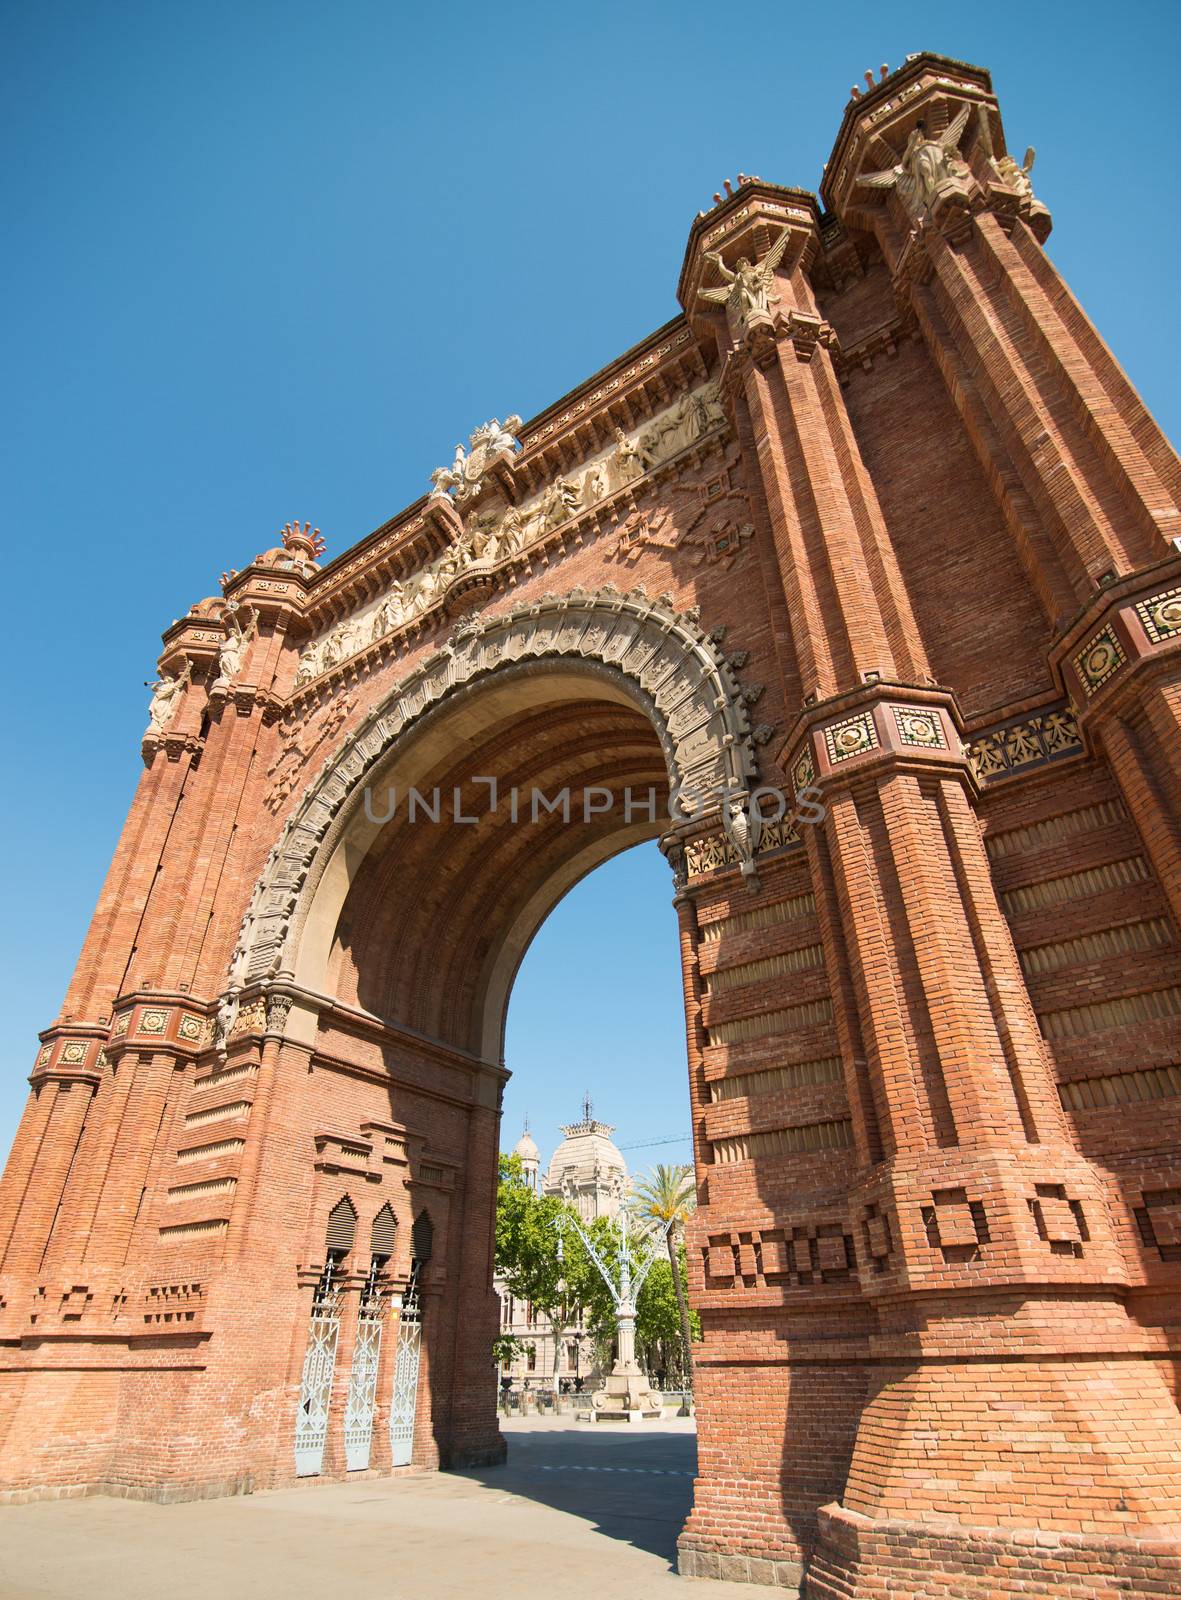 Triumphal Arch of Barcelona against blurD3 sky